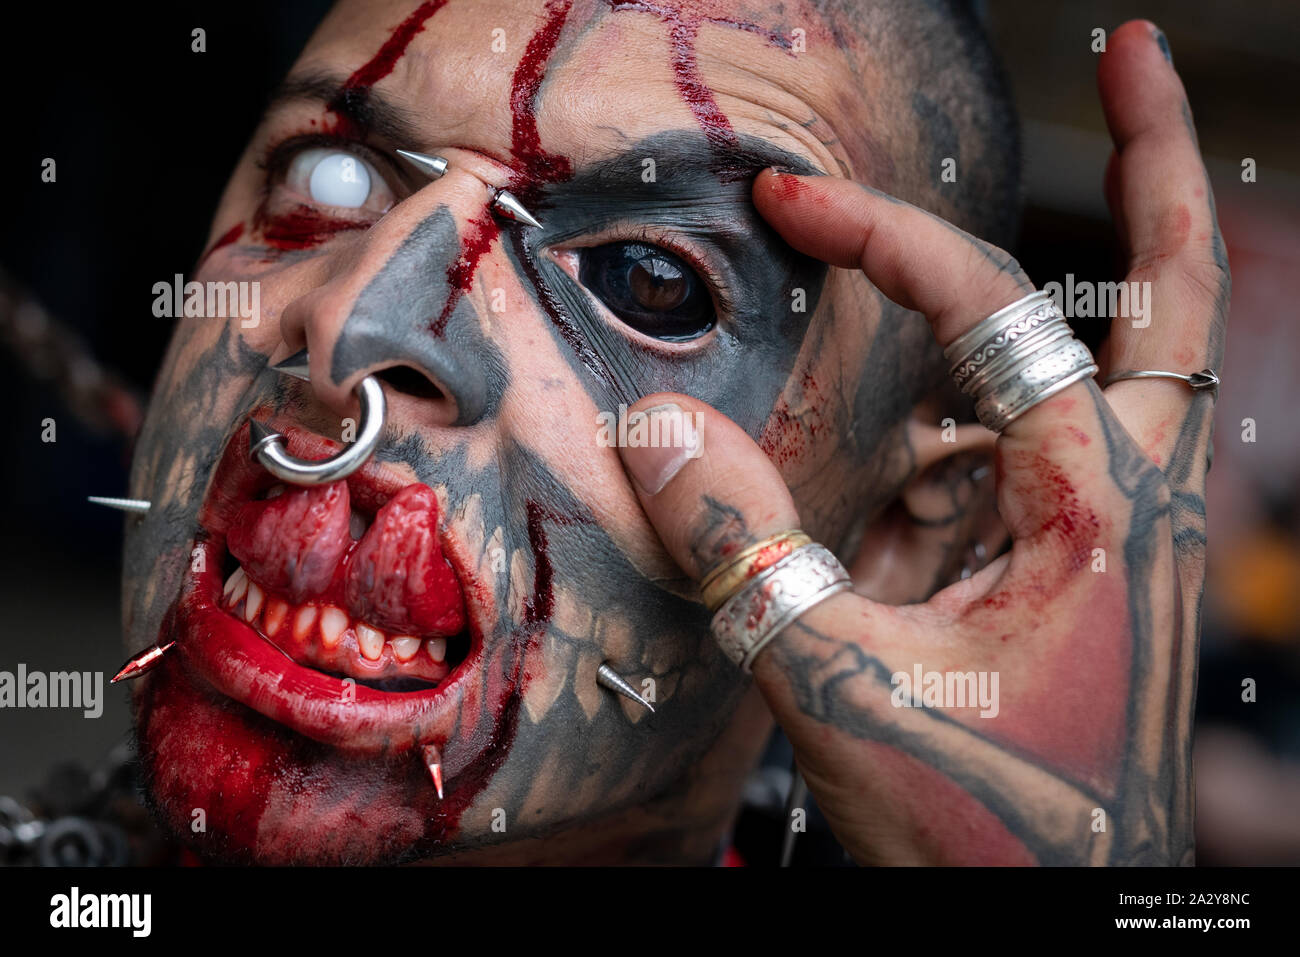 Extreme Tattoo Banque D Image Et Photos Alamy